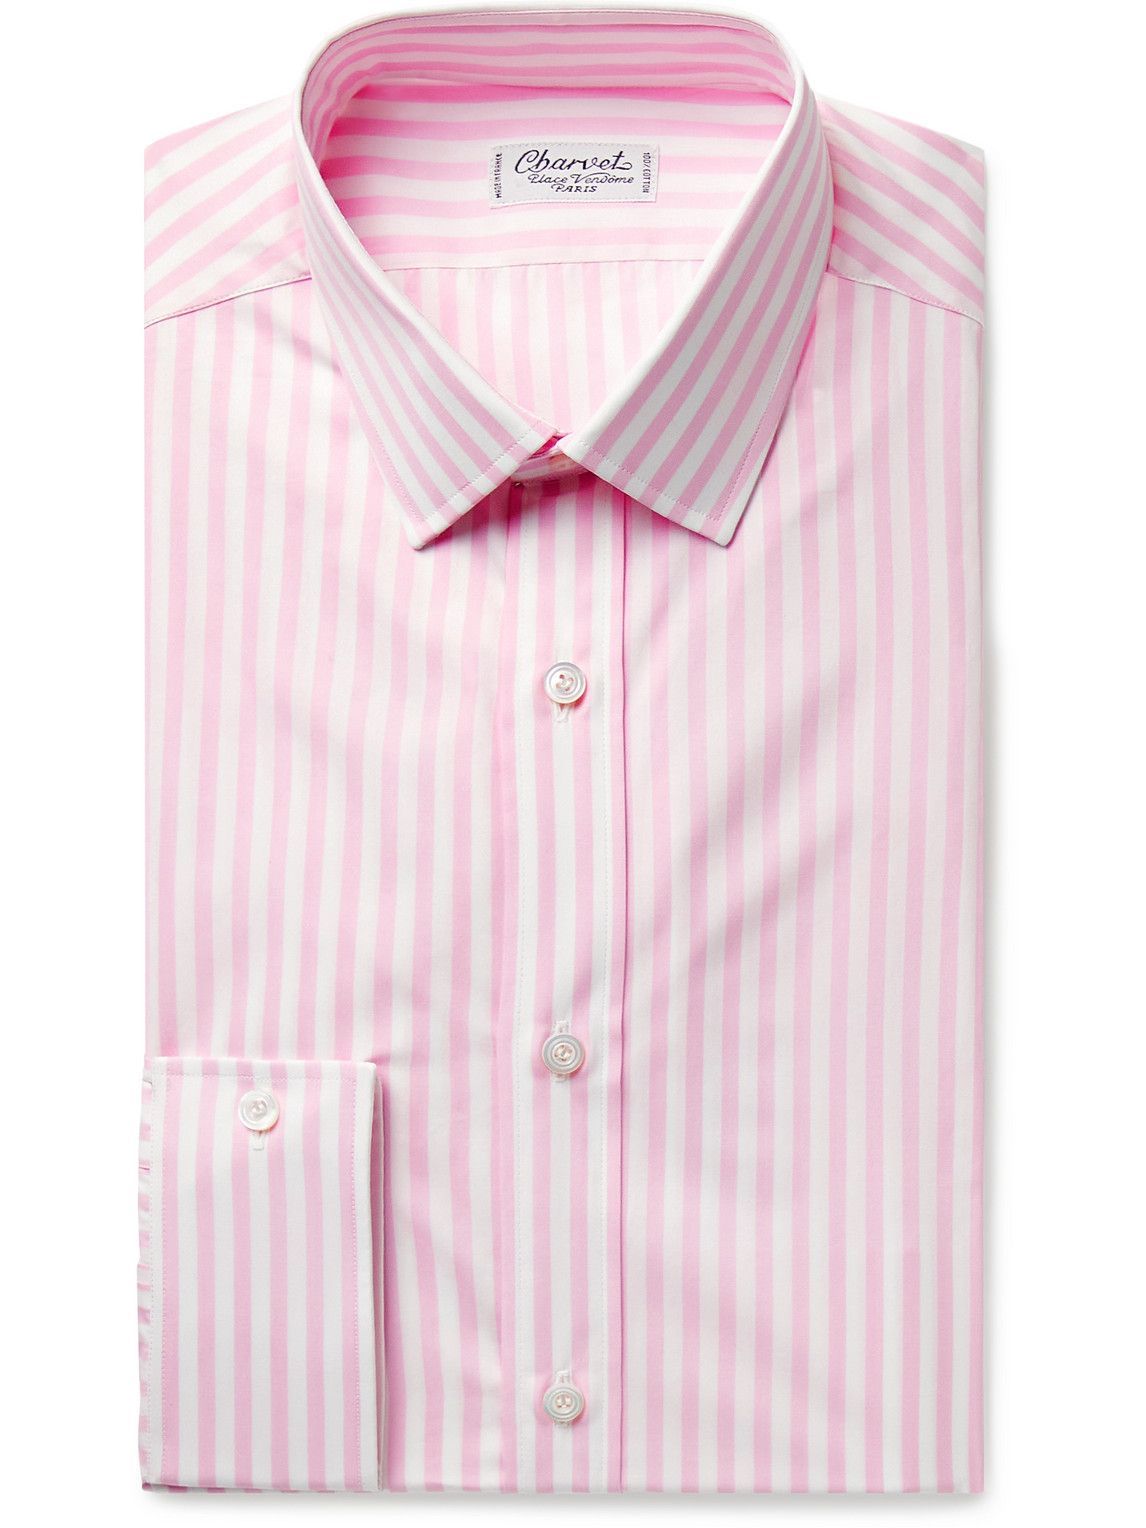 Charvet - Striped Cotton-Poplin Shirt - Pink Charvet